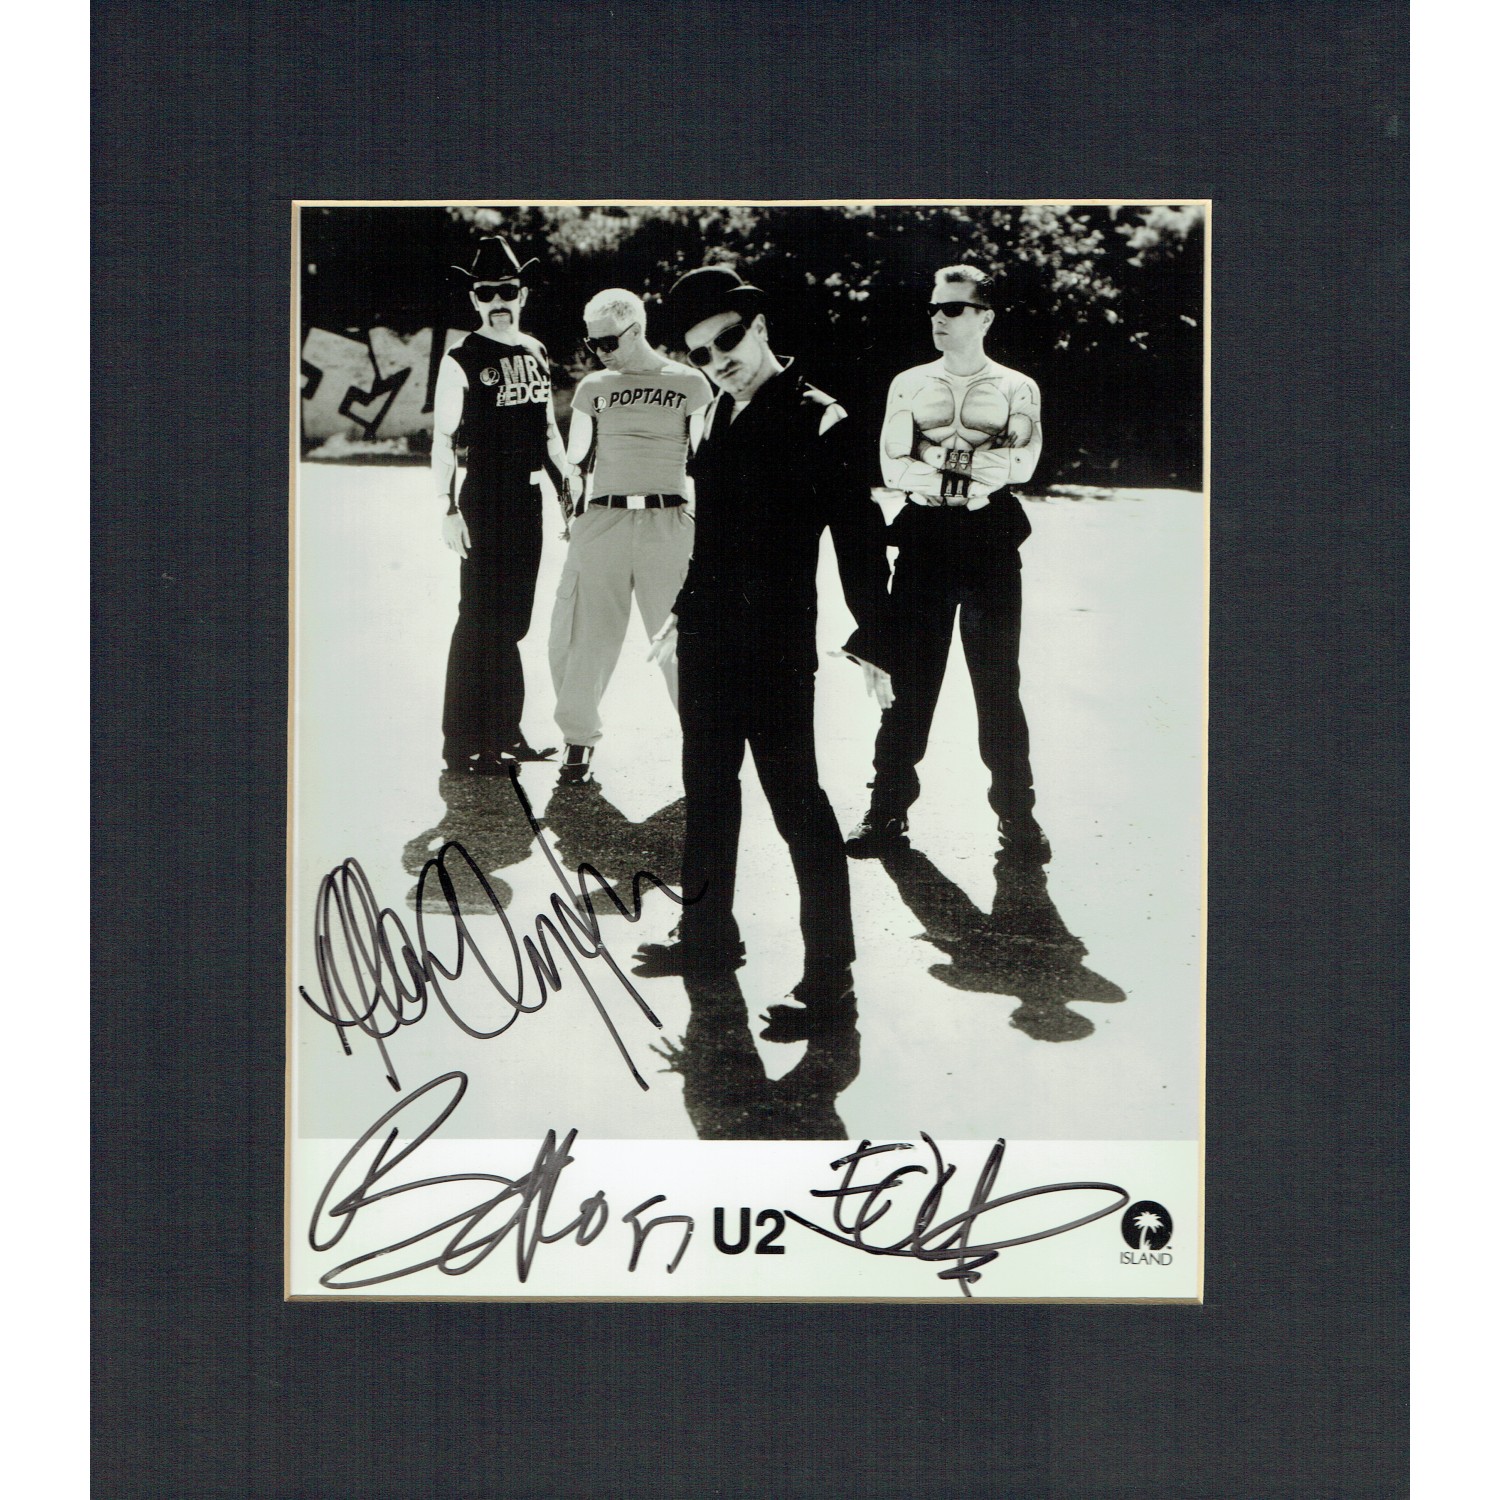 U2 8x10 Inch Photograph Signed By Bono, Edge & Adam Clayton 25709